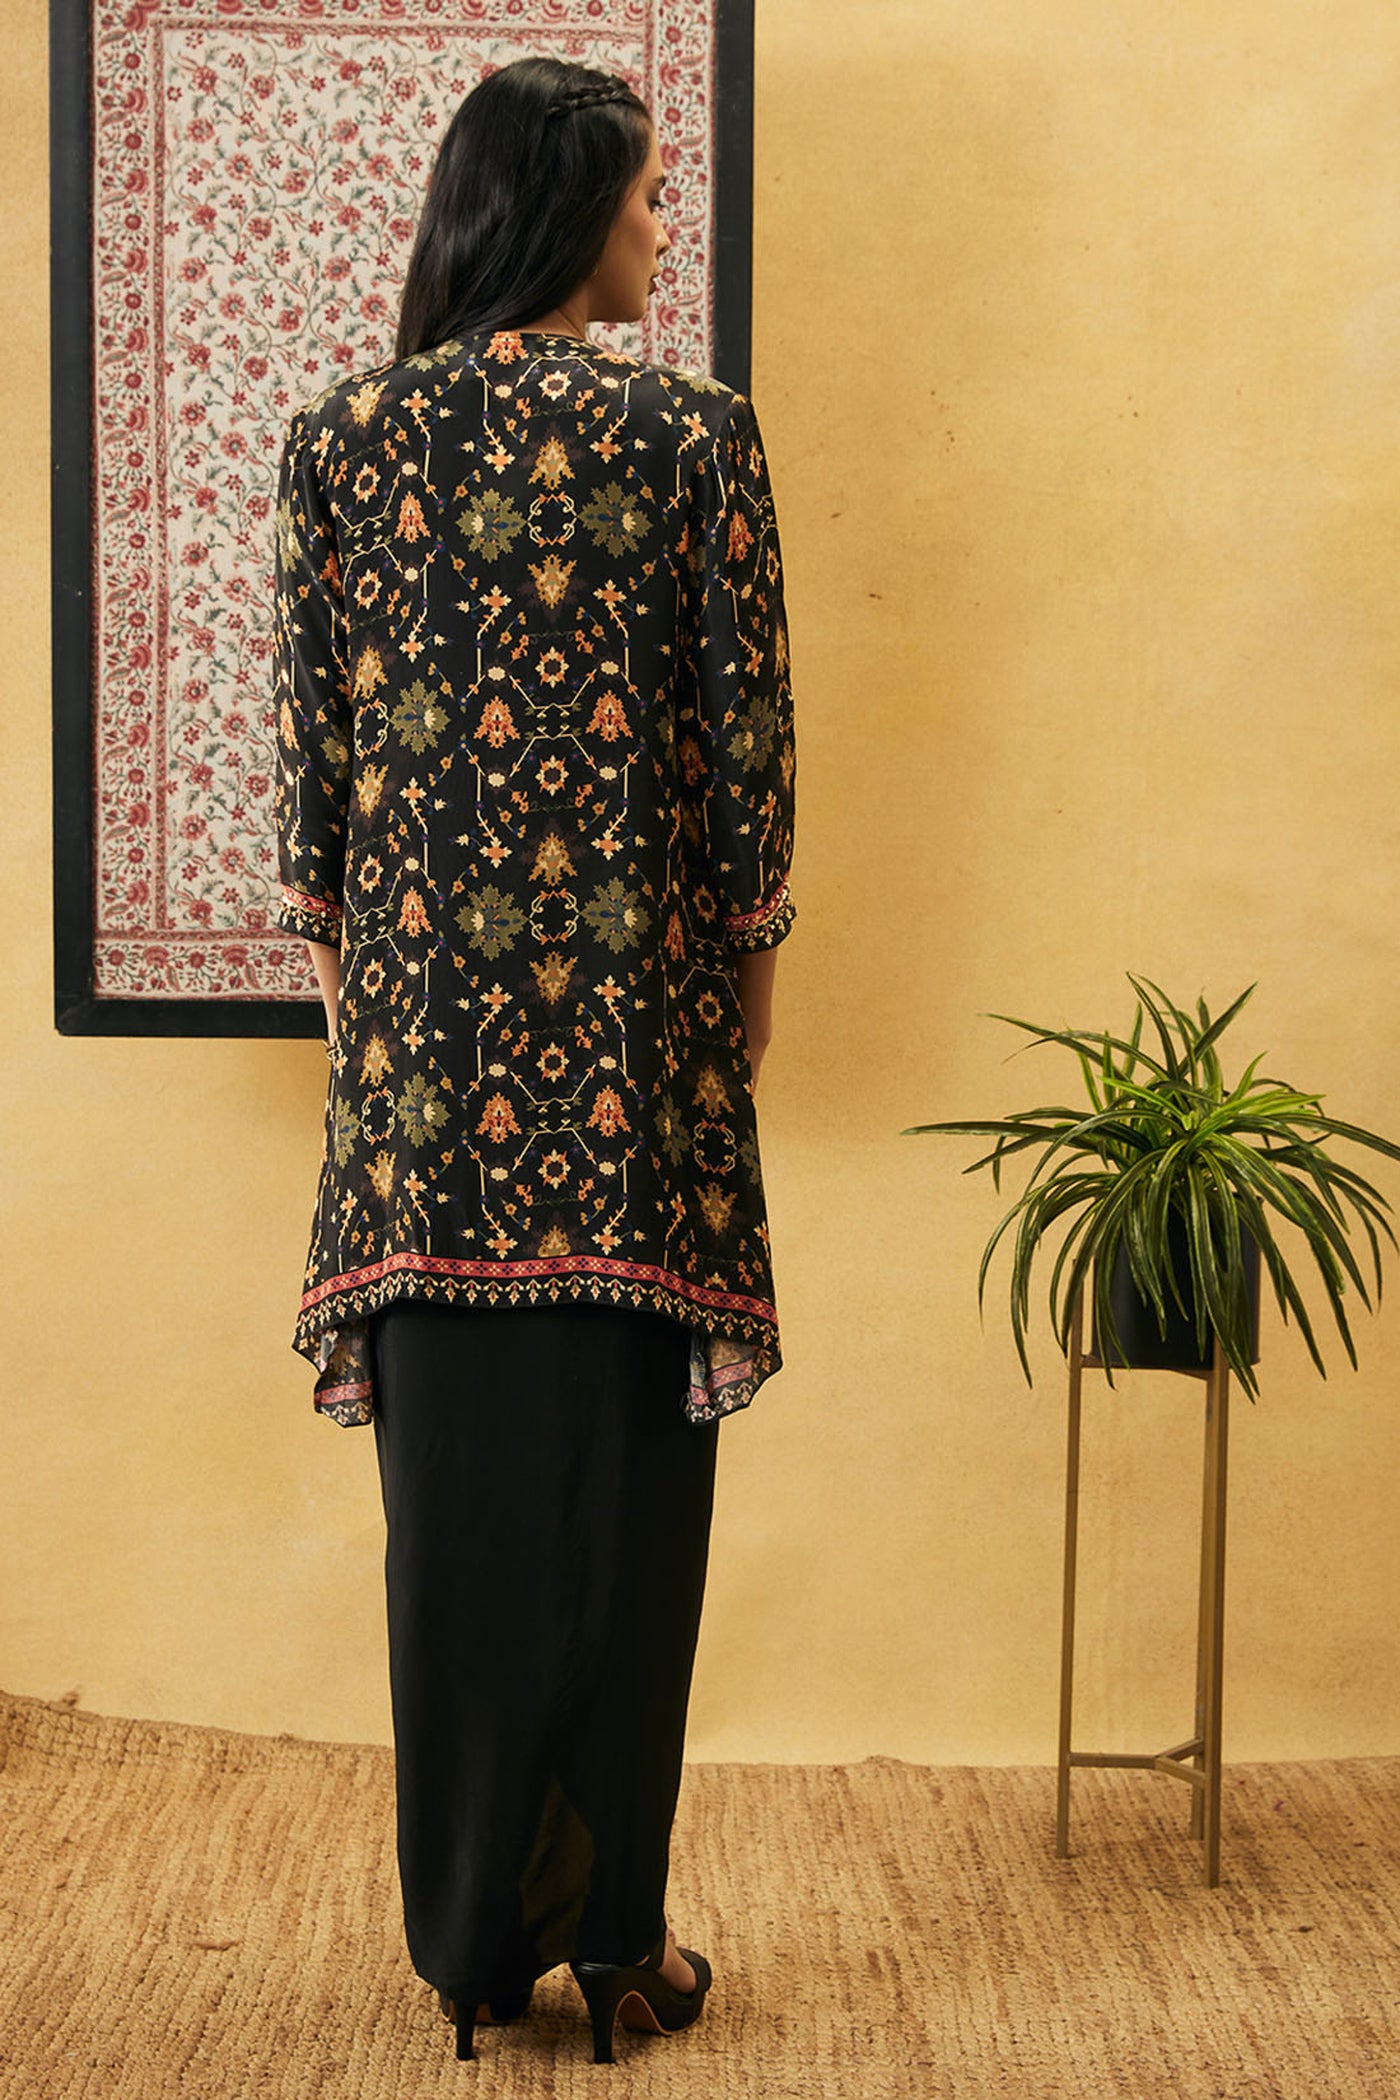 sougat paul Zahra Solid Drape Dress With Jacket black online shopping melange singapore indian designer wear